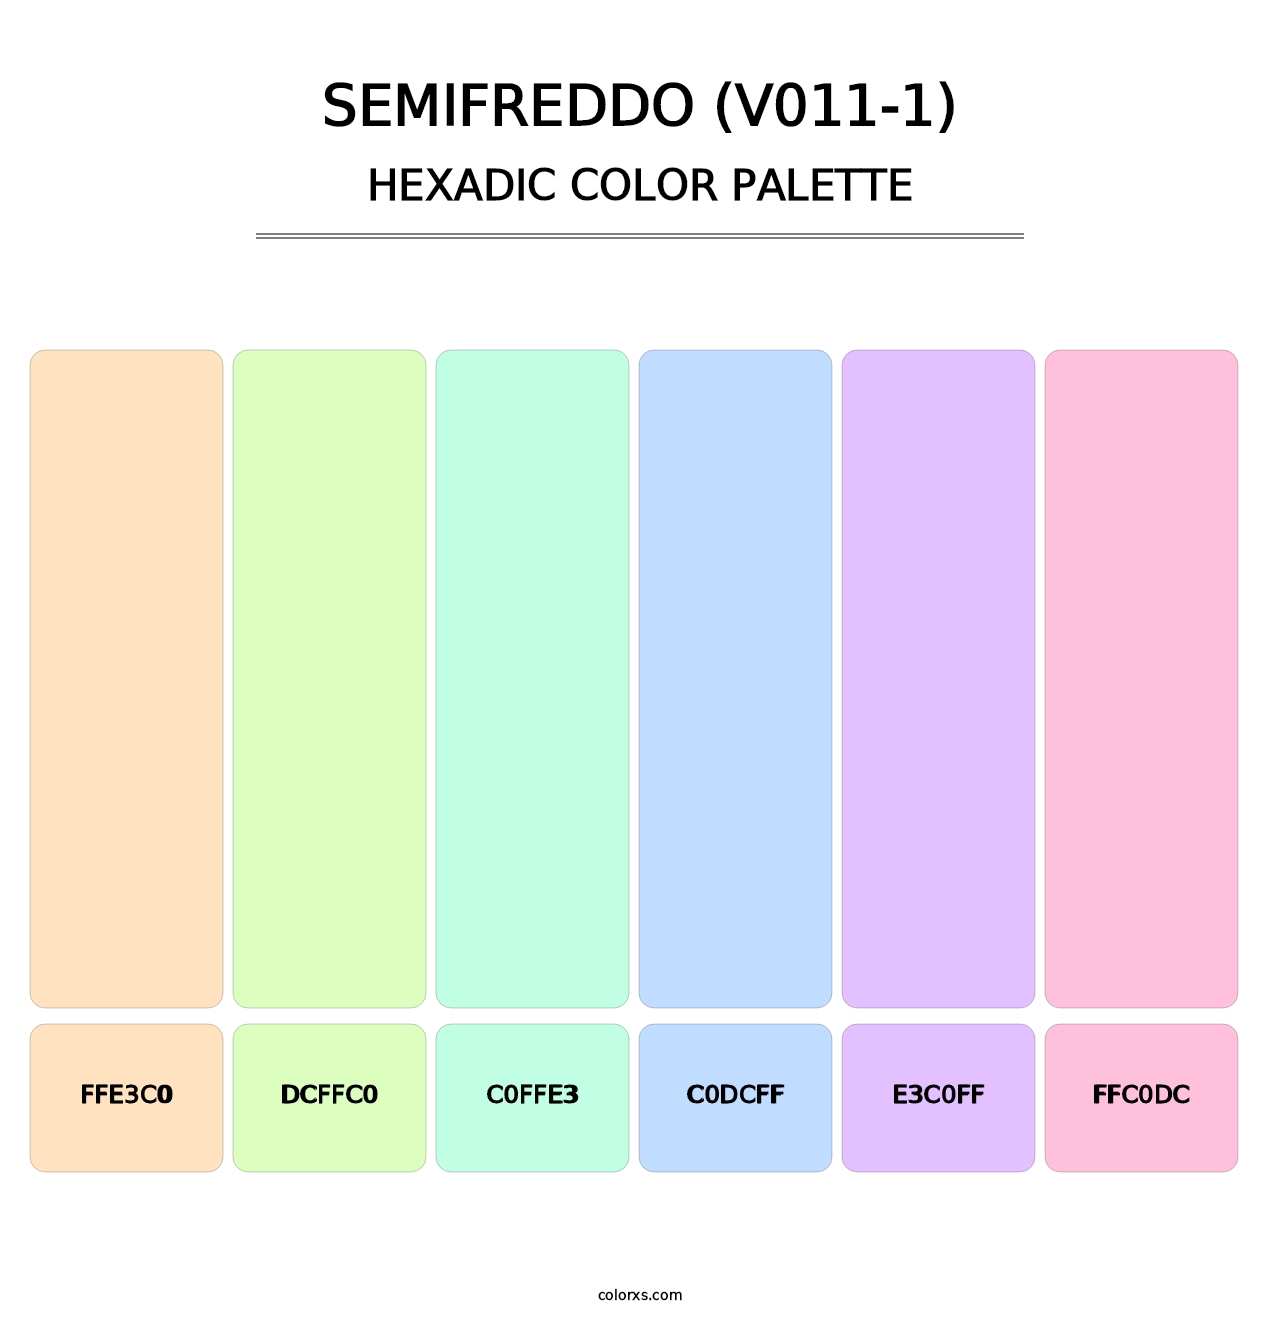 Semifreddo (V011-1) - Hexadic Color Palette